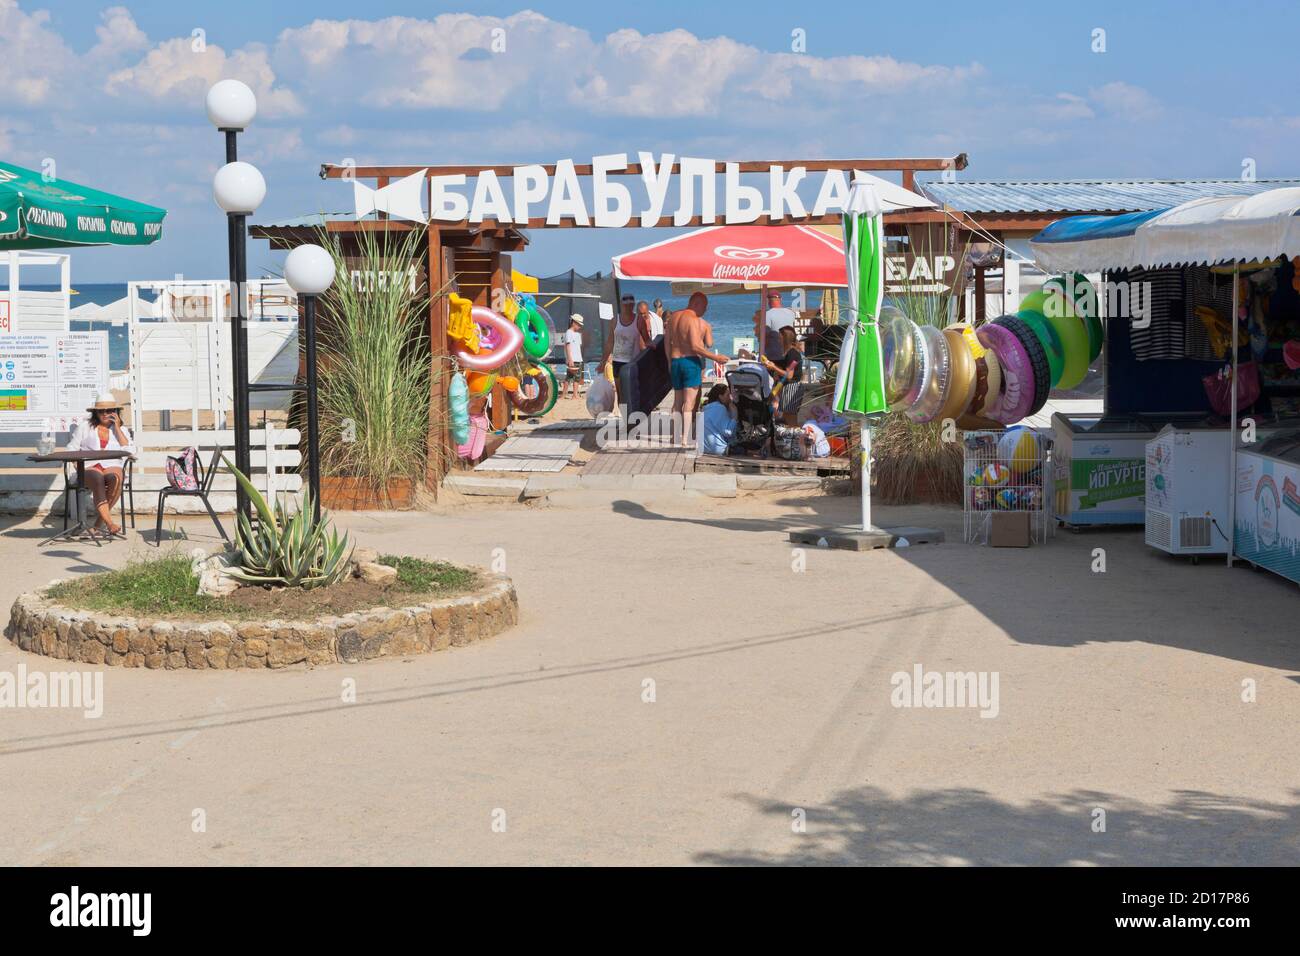 Zaozyornoye, Evpatoria, Crimea, Russia - July 21, 2020: Entrance to the Barabulka beach in the resort village of Zaozyornoye, Evpatoria, Crimea Stock Photo